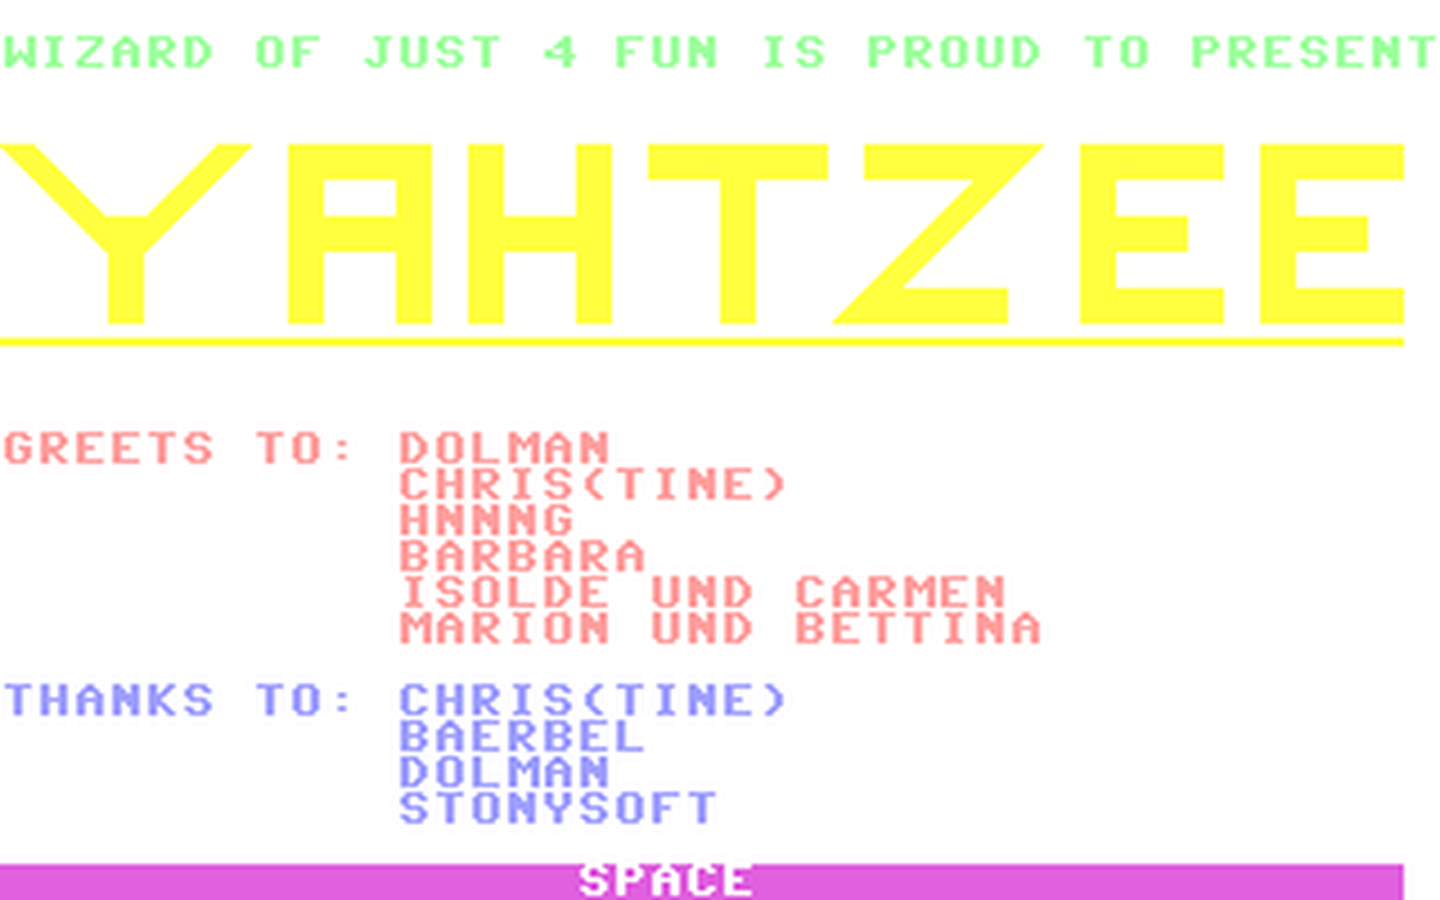 C64 GameBase Yahtzee Stonysoft_PD 1993